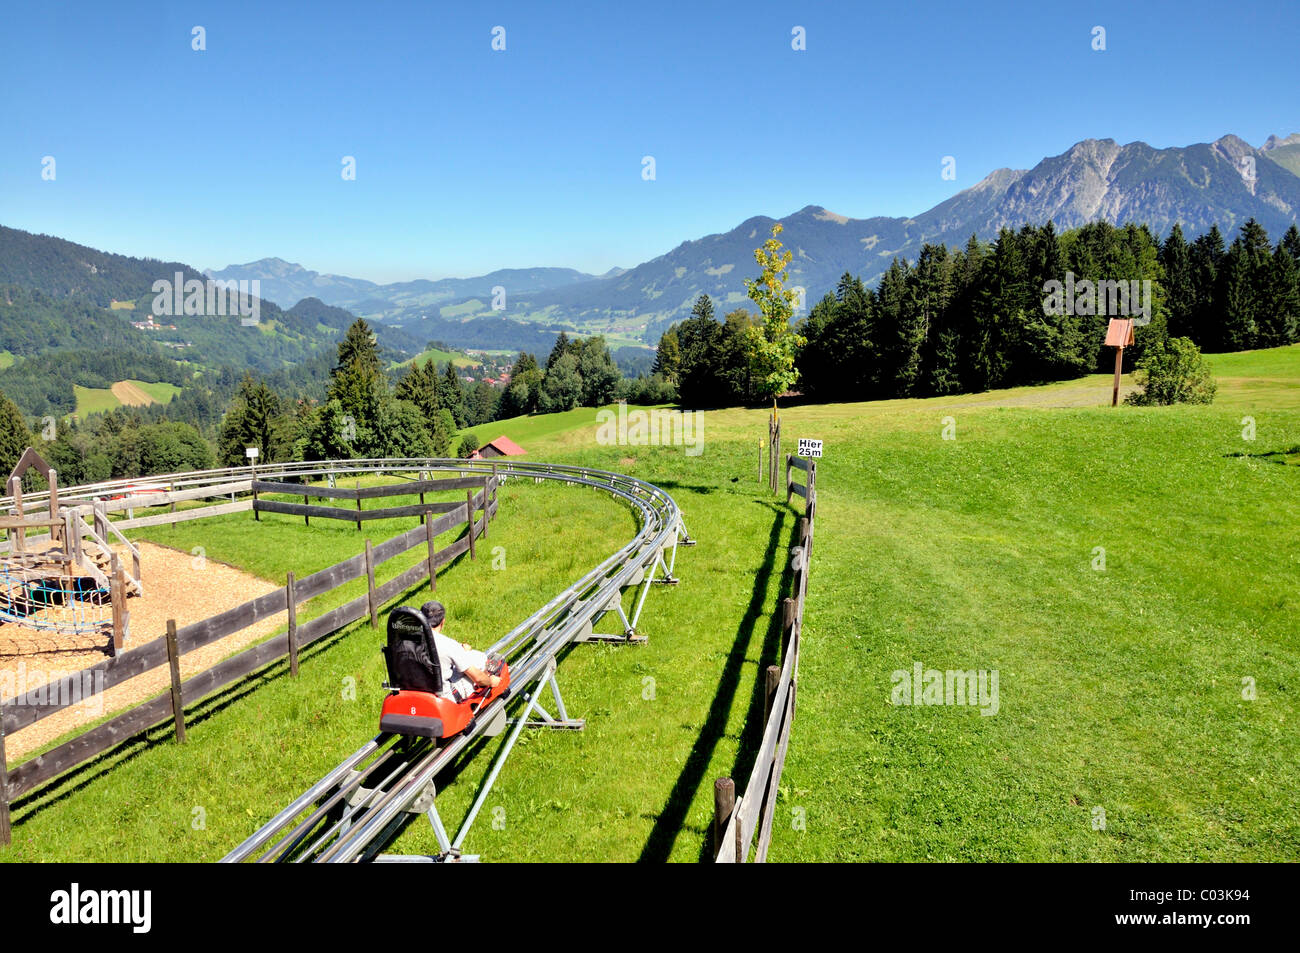 SoellereckRodel, an alpine roller coaster, Soellereck Bahn railway,  Oberstdorf, Allgaeu, Bavaria, Germany, Europe Stock Photo - Alamy